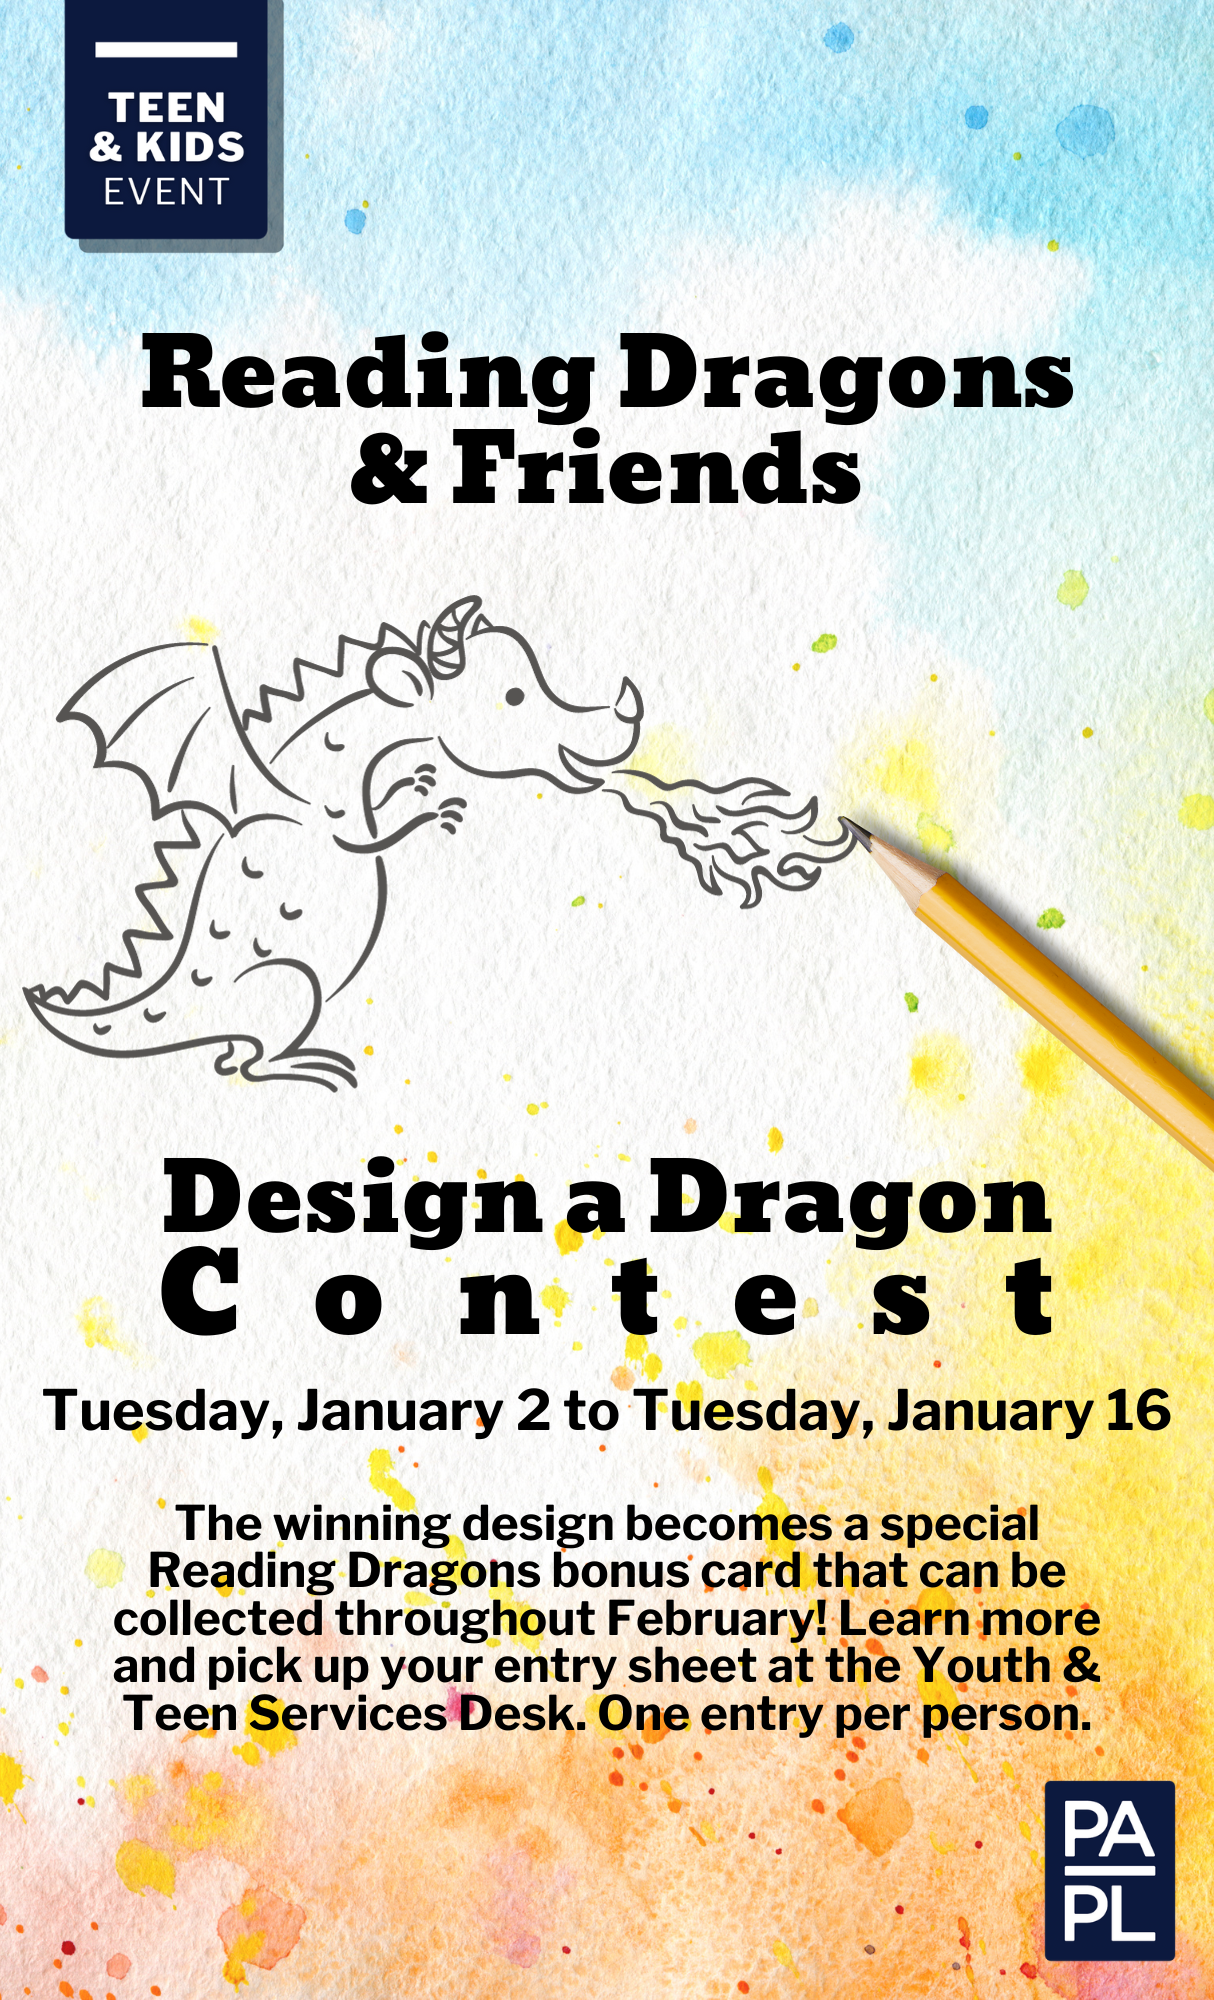 Design a Dragon Contest